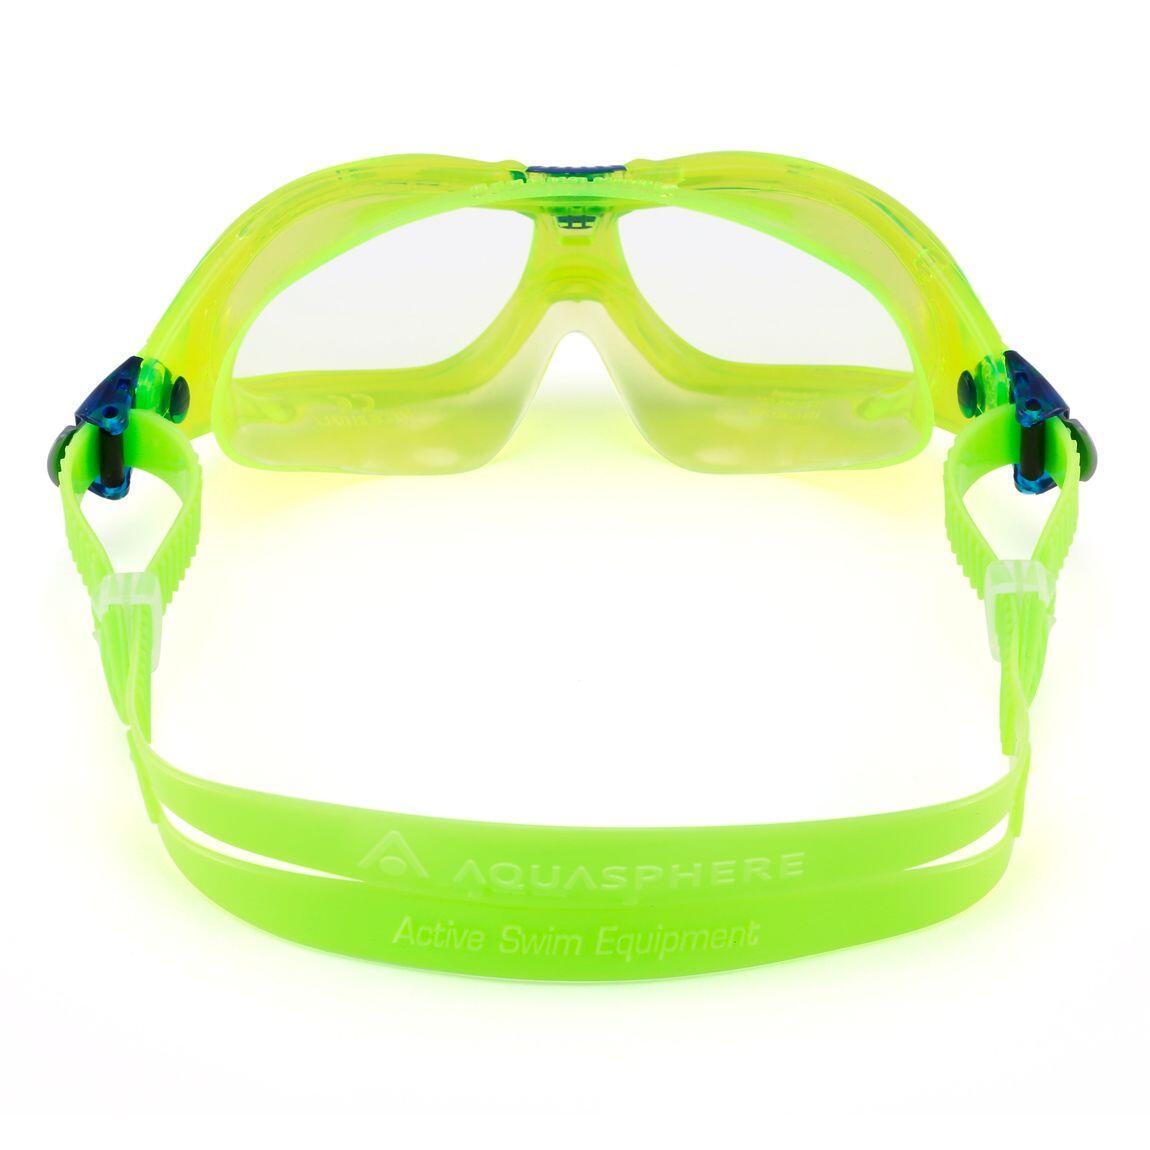 Aqua Sphere Seal Kid 2 Swimming Goggle 2/5